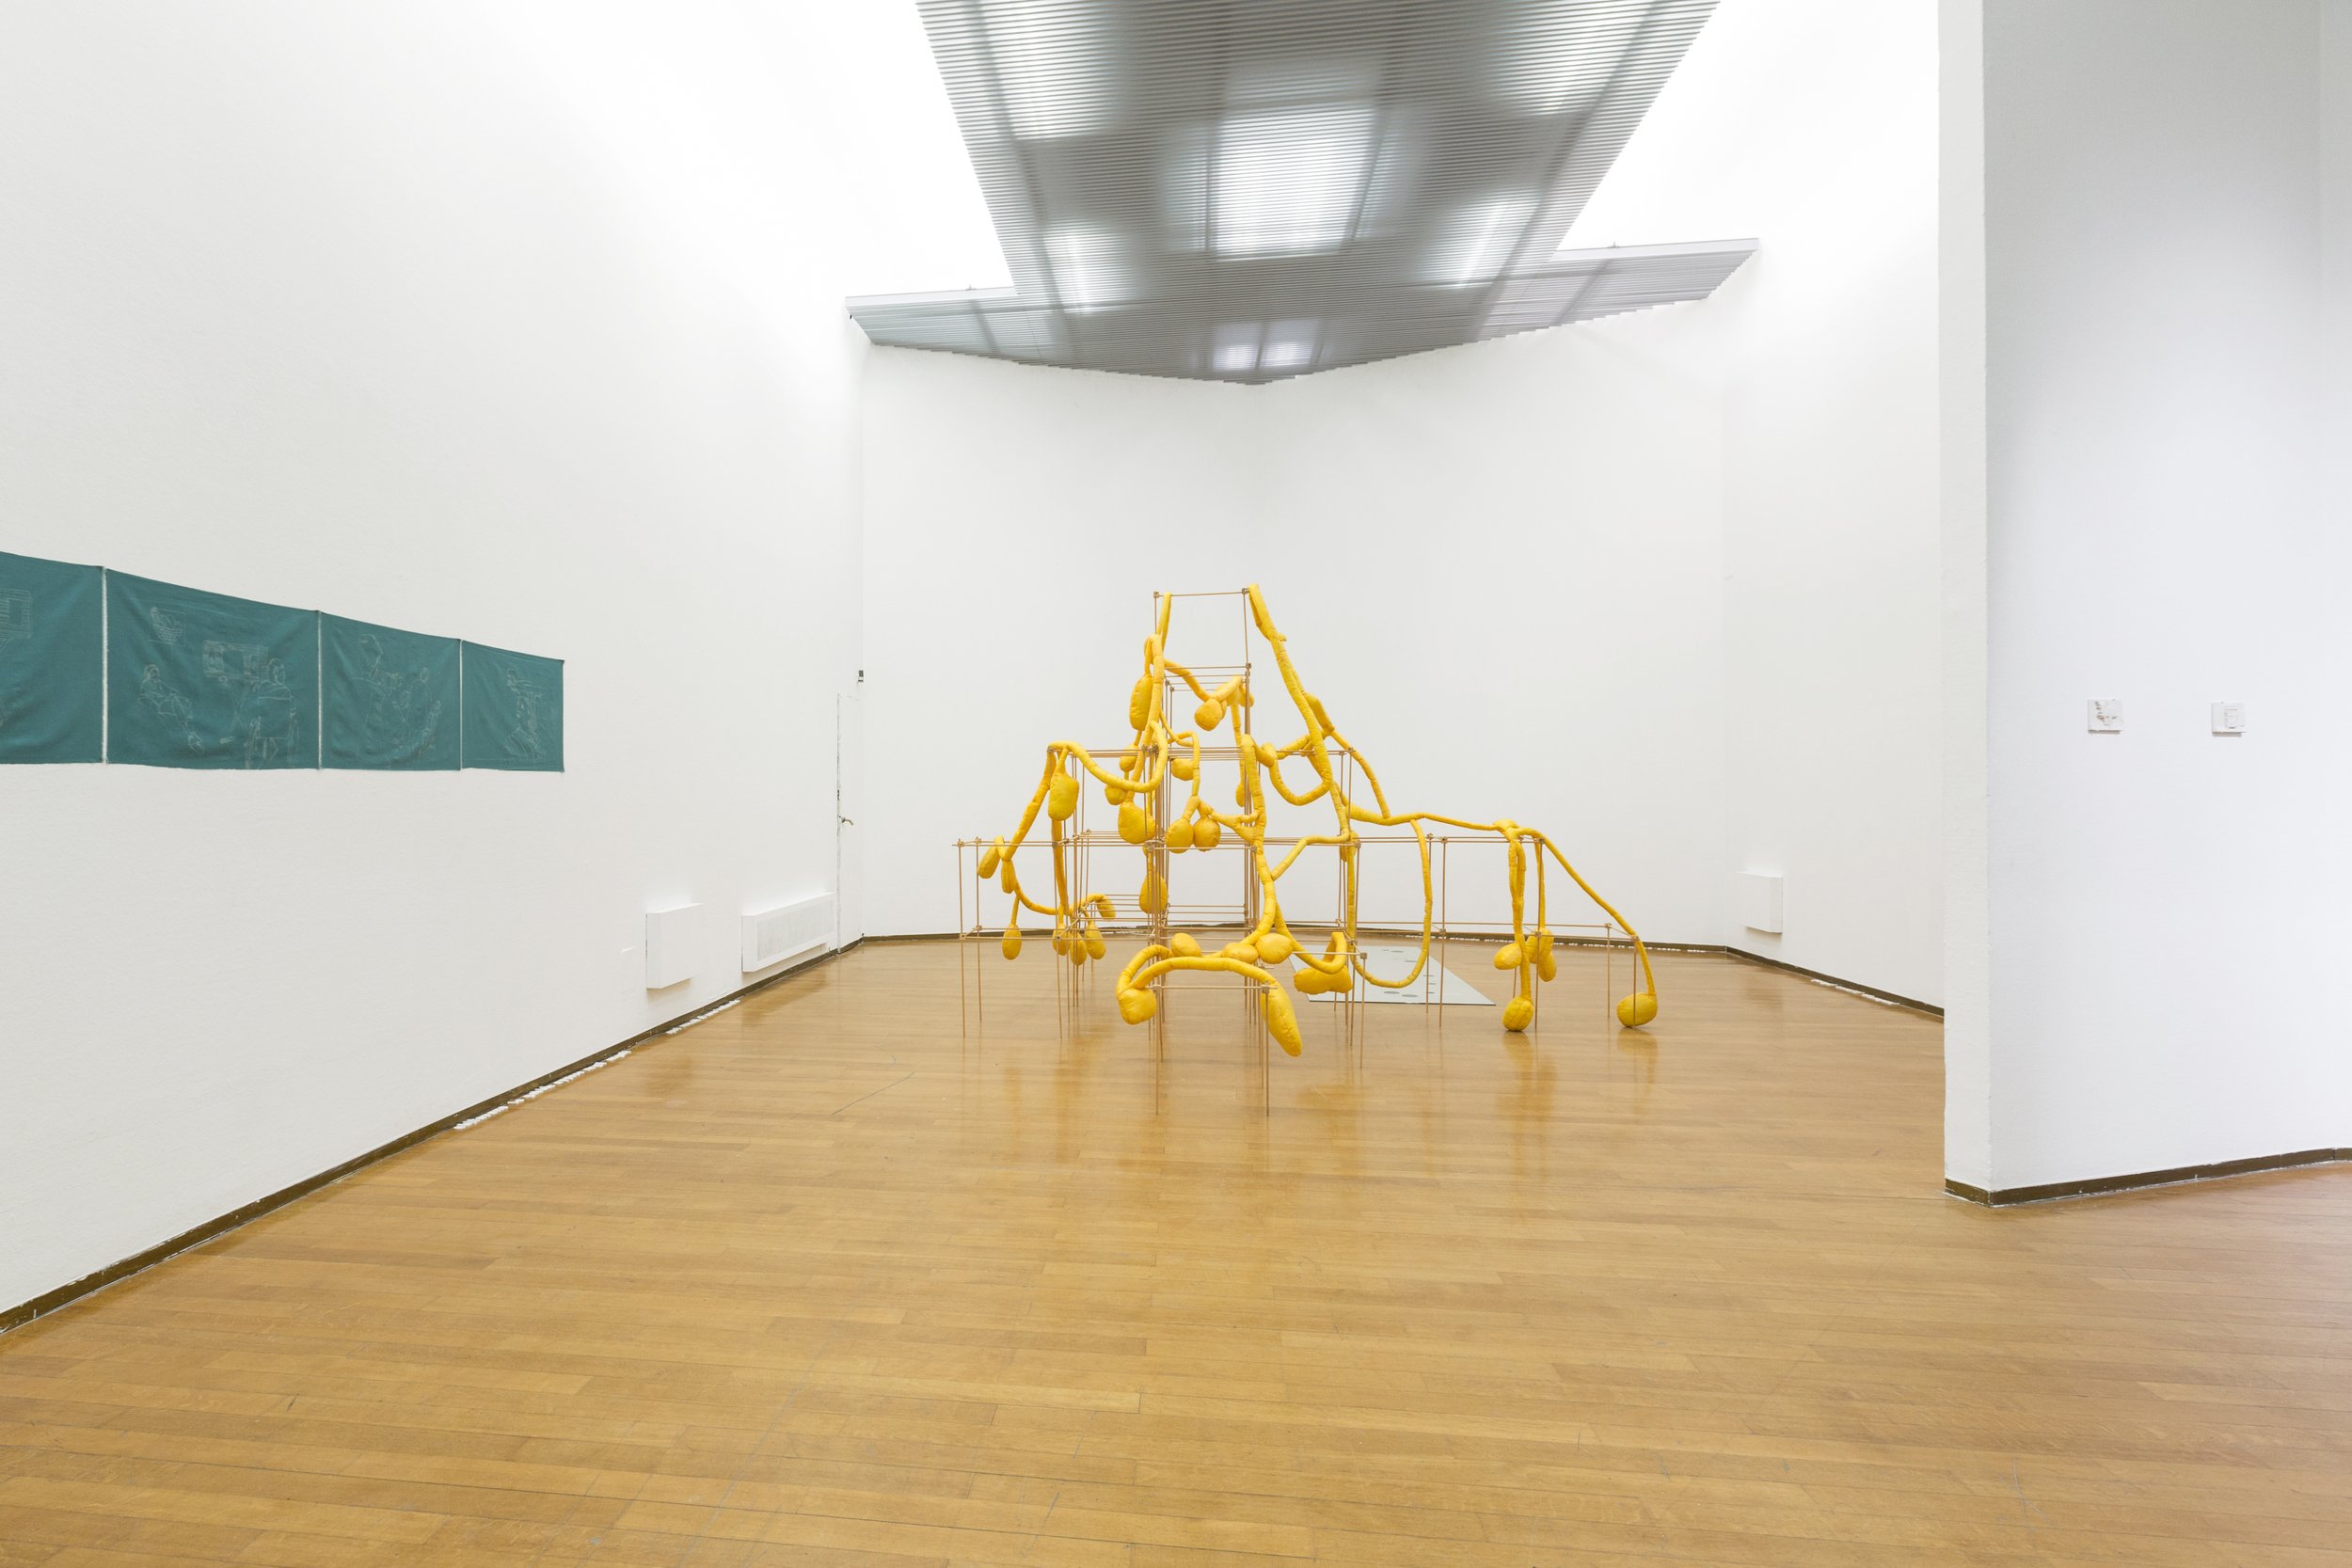  Installation view, Eva Marisaldi, PAC, Milano, 2018 